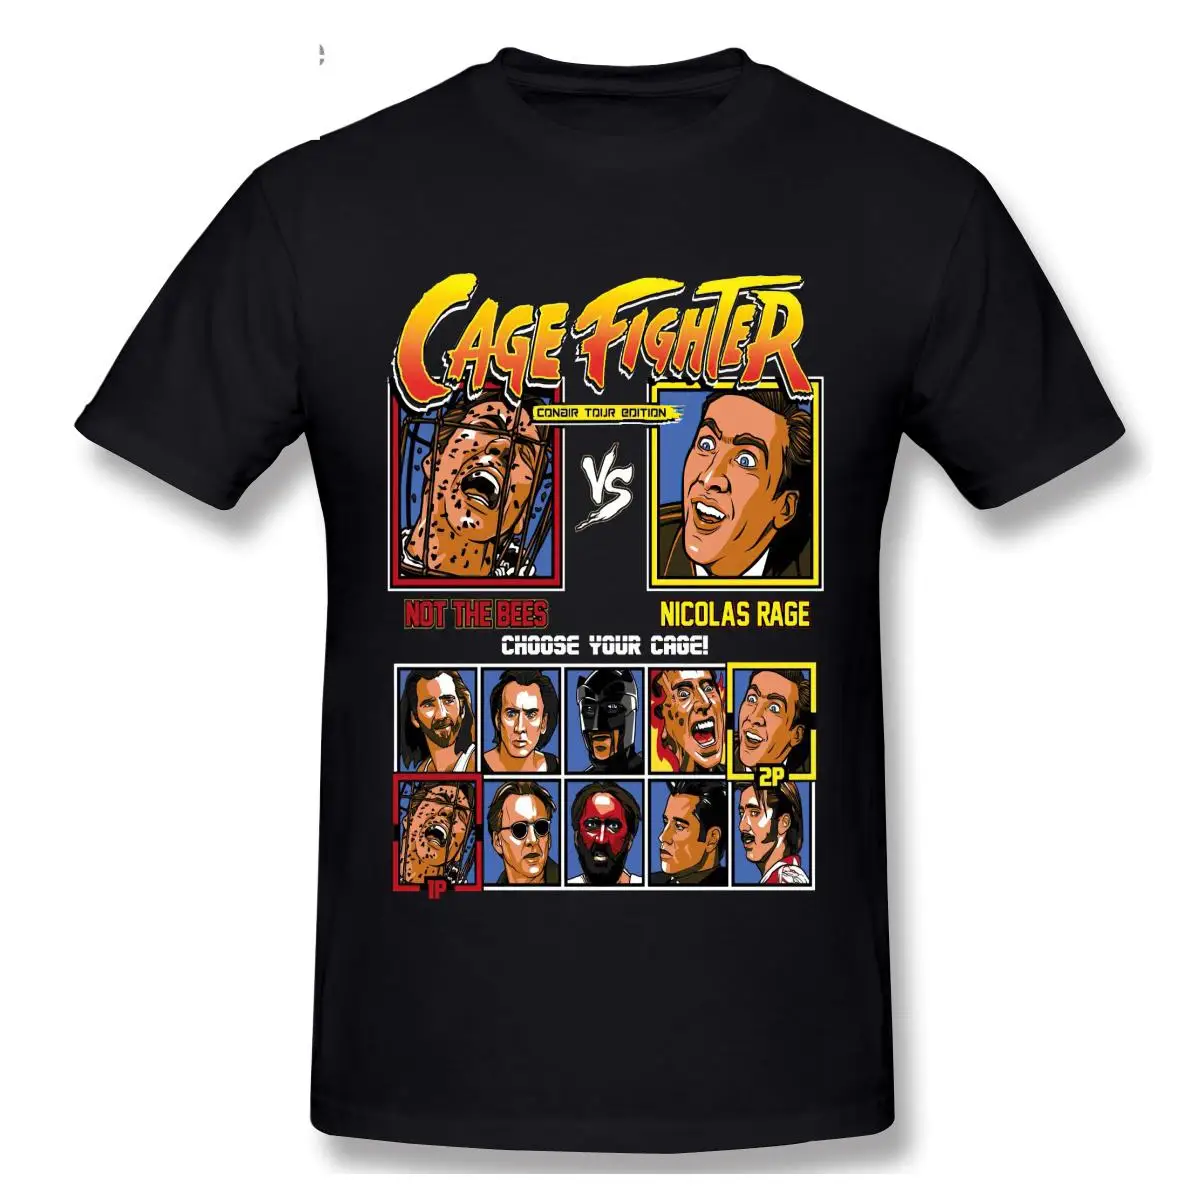 

Nicolas Cage Fighter - Conair Tour Edition Shirt Casual Clothes Men T-Shirt Fashion Sweatshirt Cotton Clothing T-Shirts Tee Top